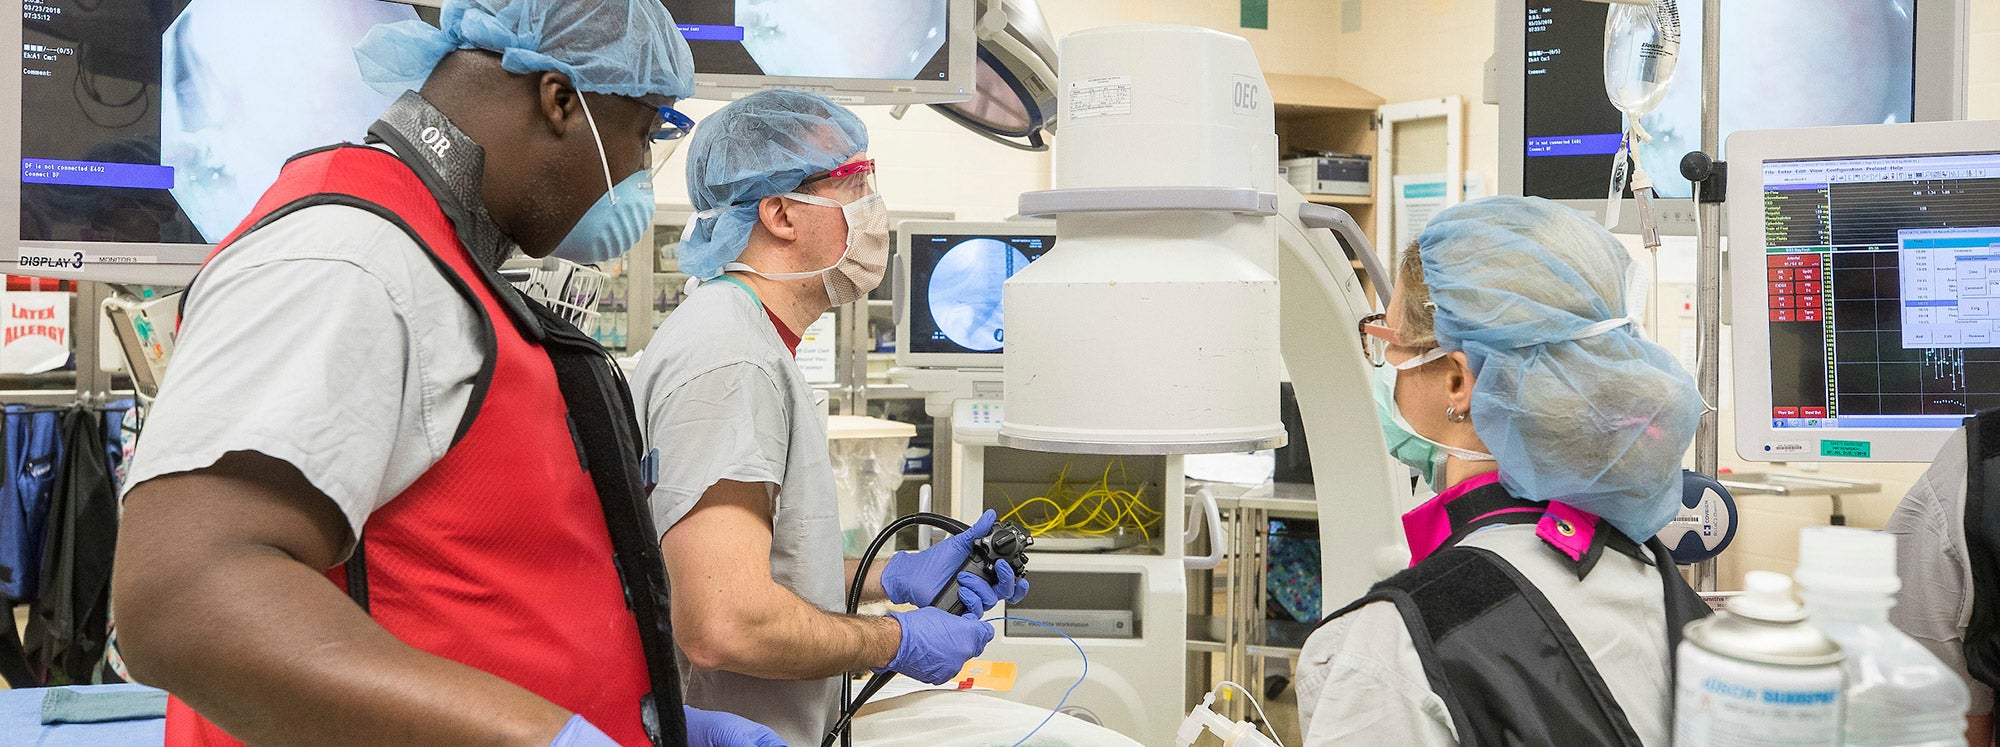 ECU surgeons conduct POEM procedure at Vidant Medical Center. (Photos by Cliff Hollis)